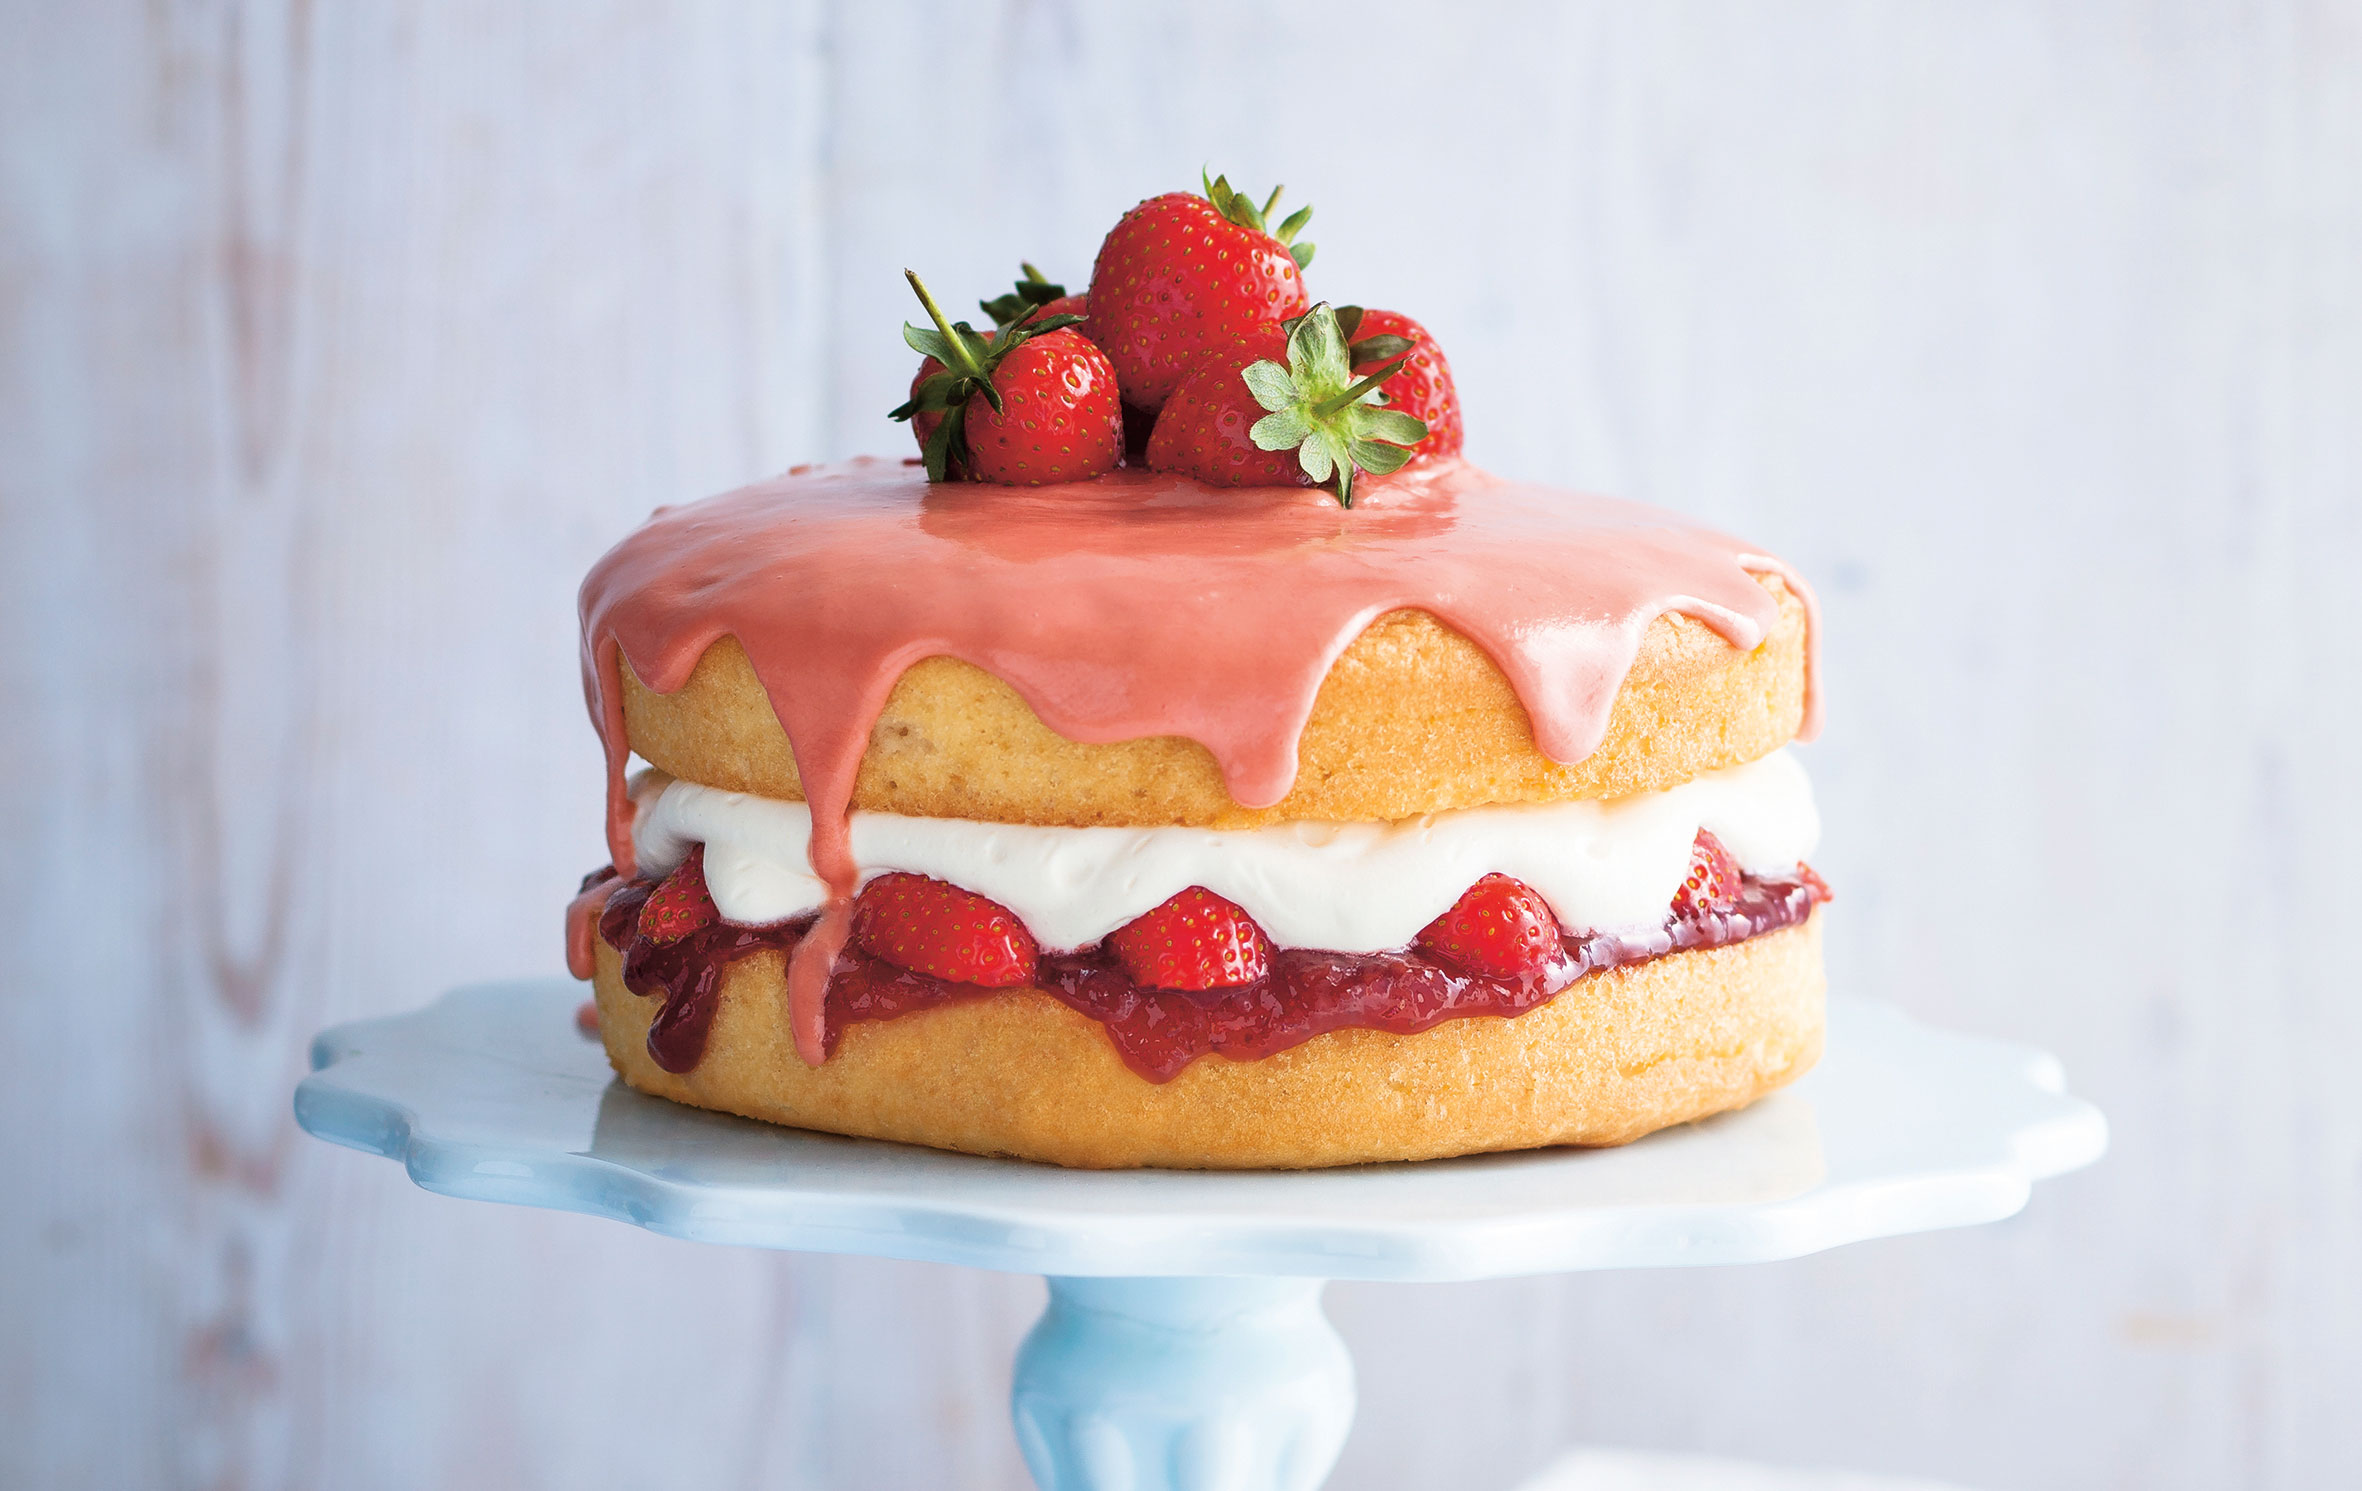 46 Summer cake recipes - Enjoy our seasonal, beautiful cake recipes